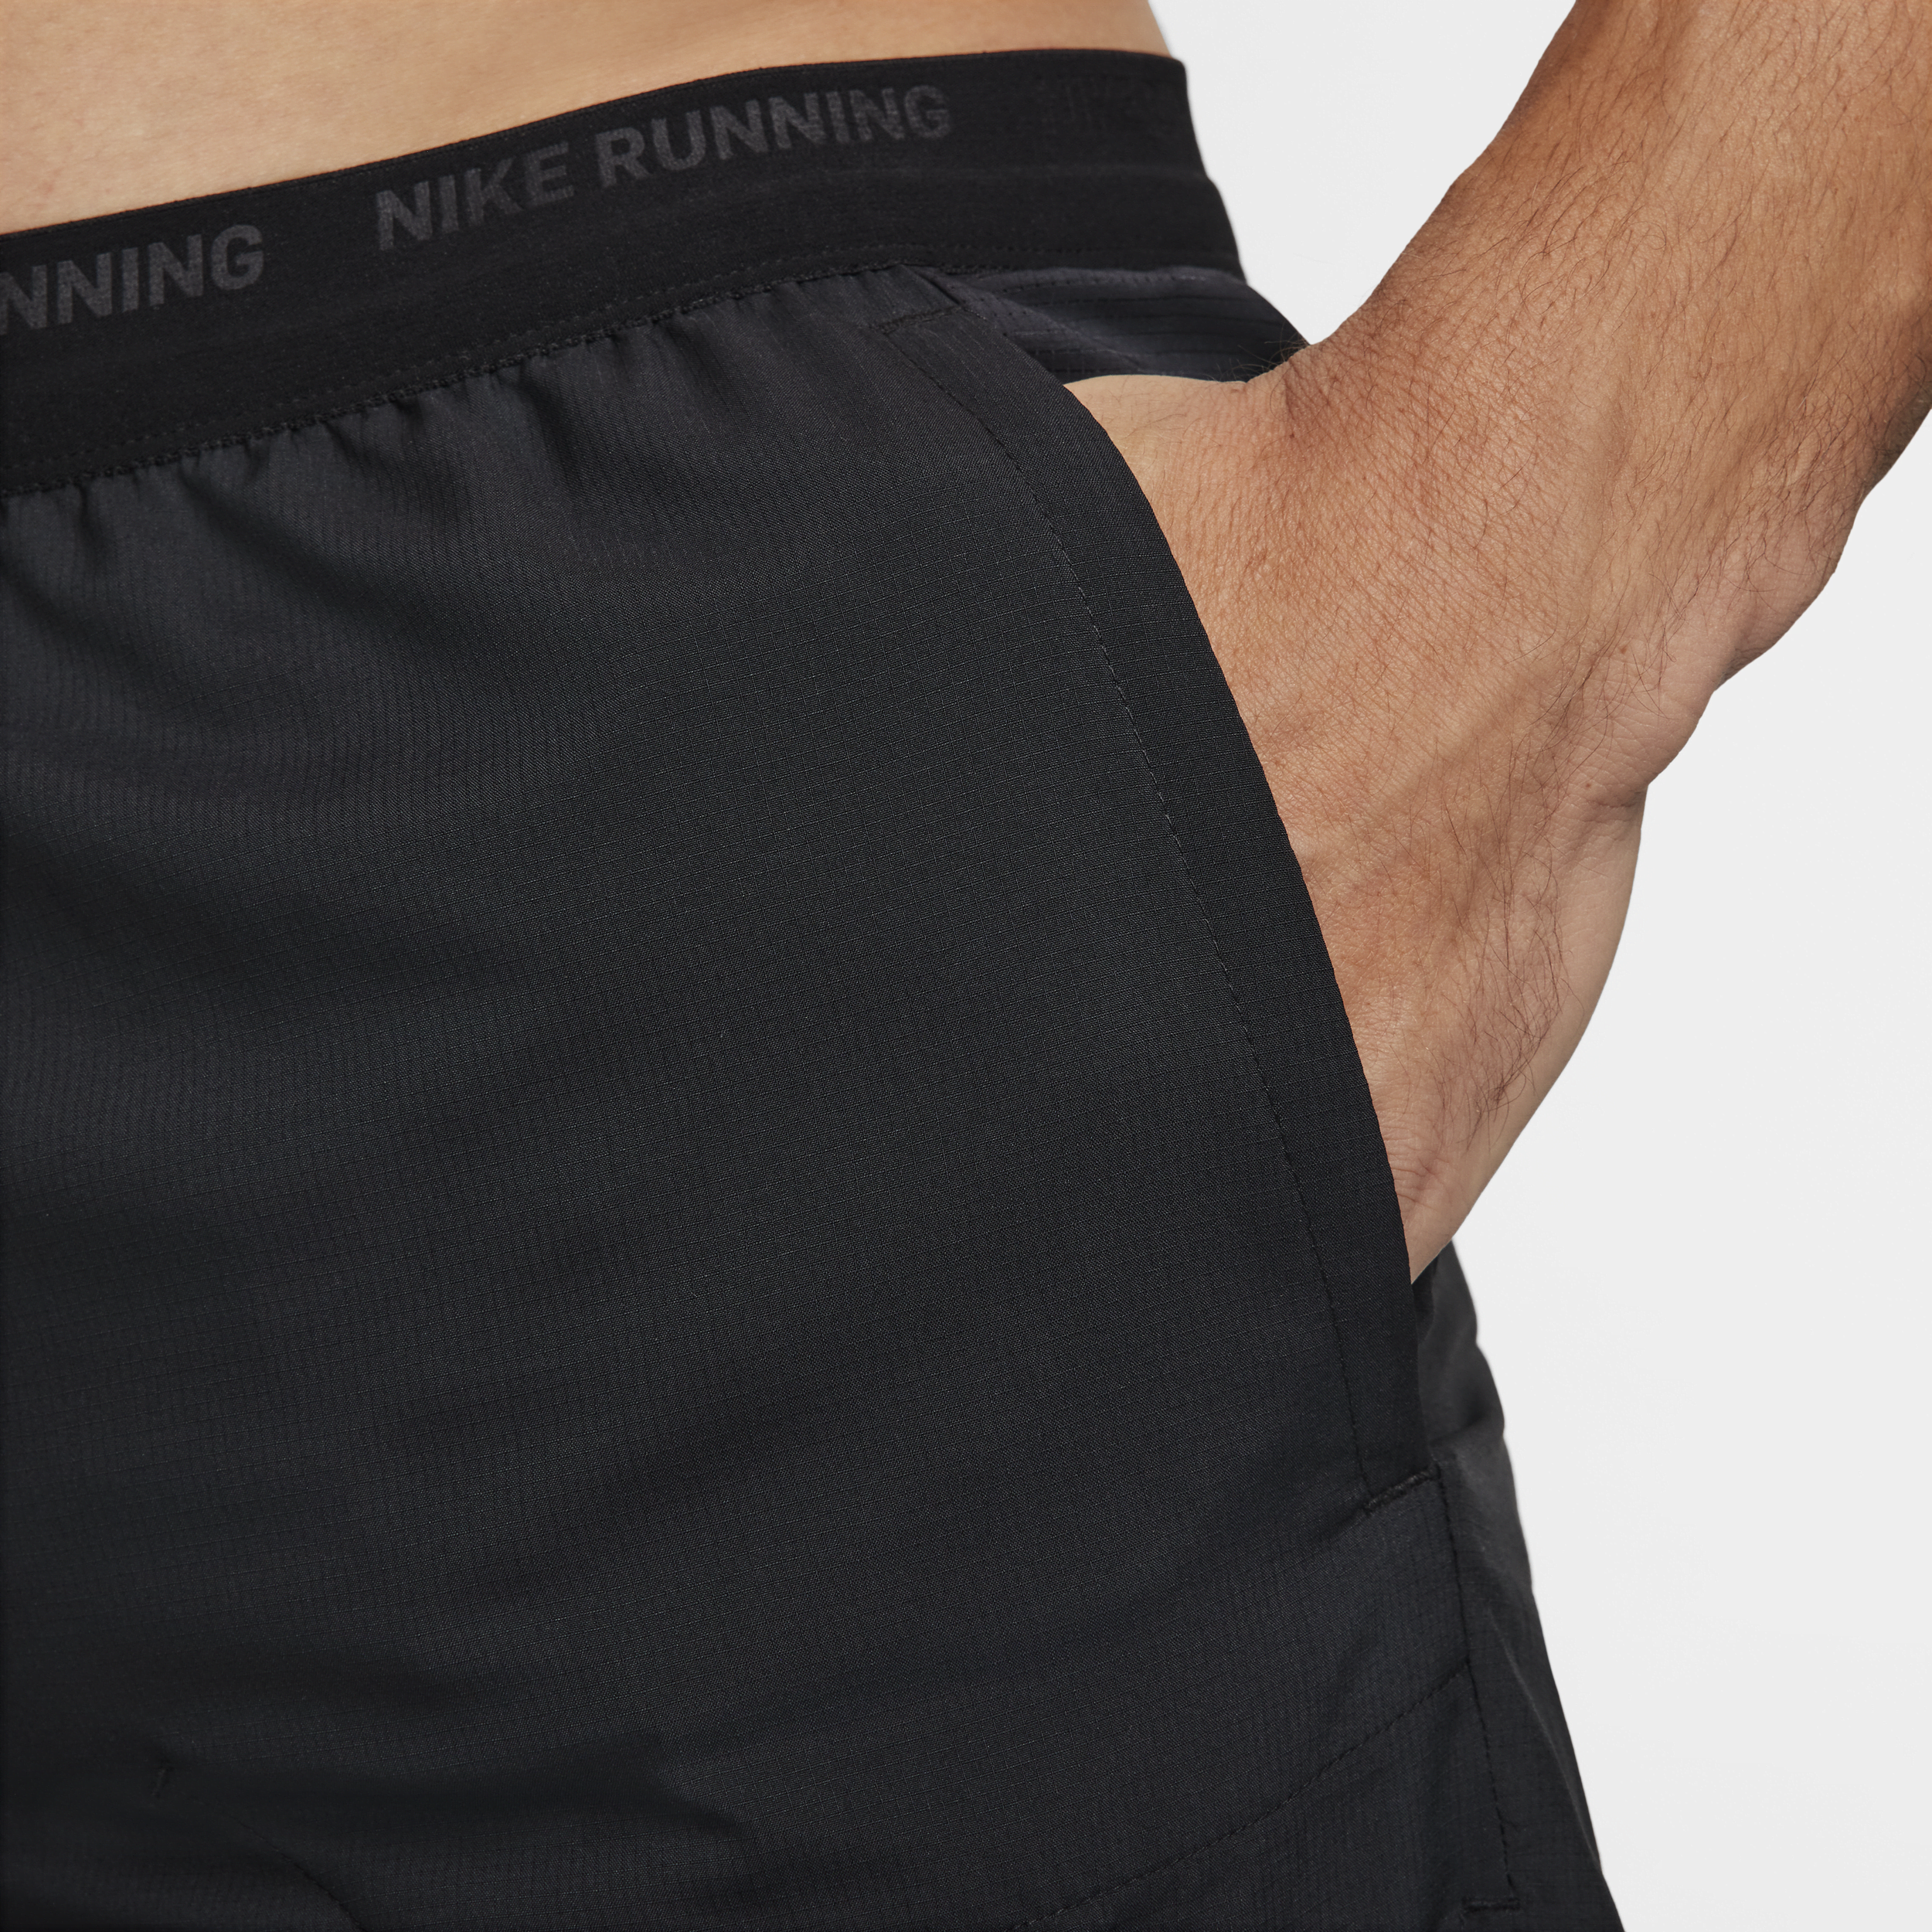 Nike Running Energy Stride hardloopshorts met binnenbroek voor heren (13 cm) Zwart